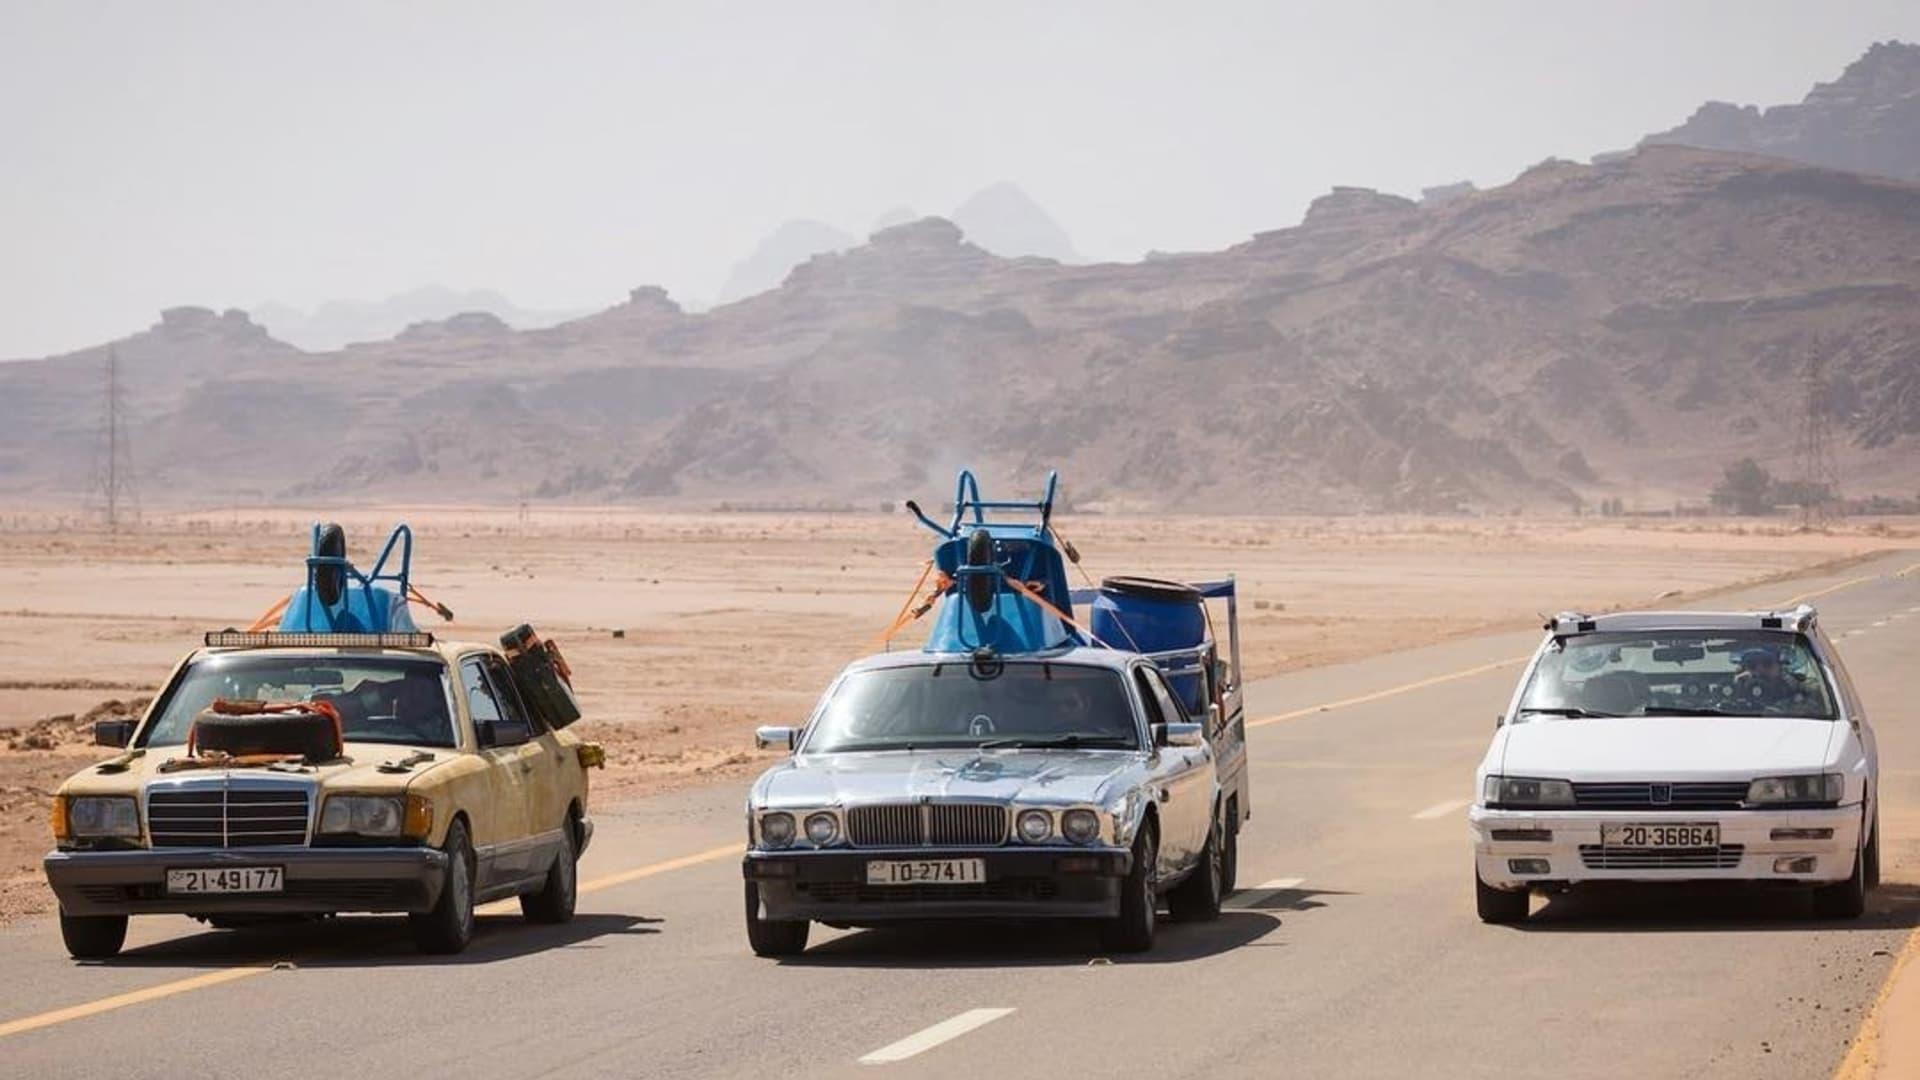 Top Gear France - Exploring Jordan backdrop